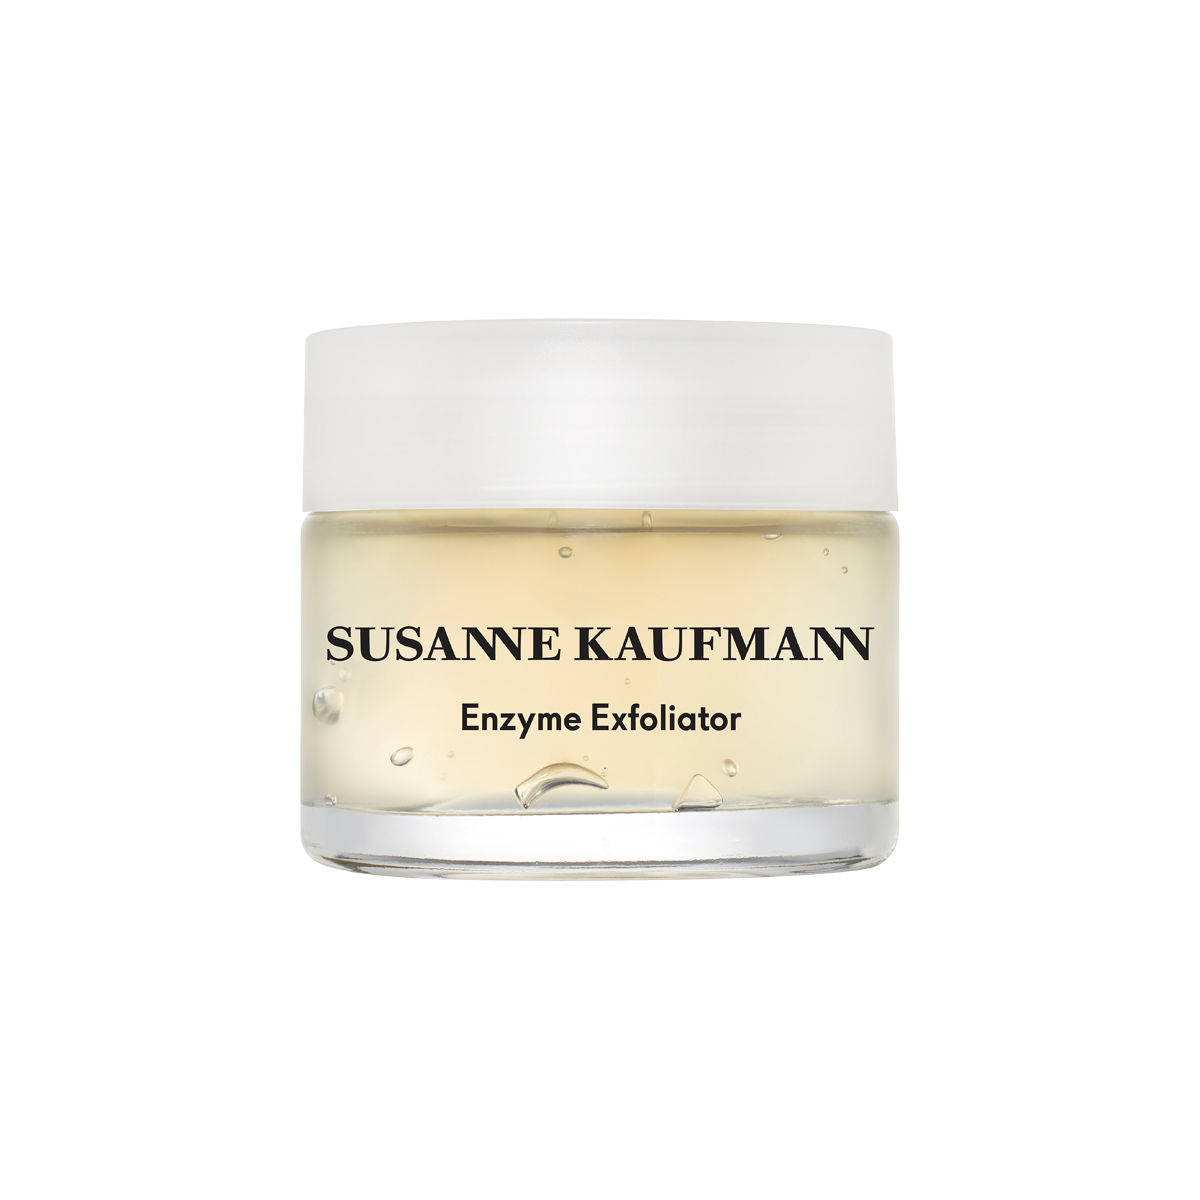 Susanne Kaufmann - Enzyme Exfoliator